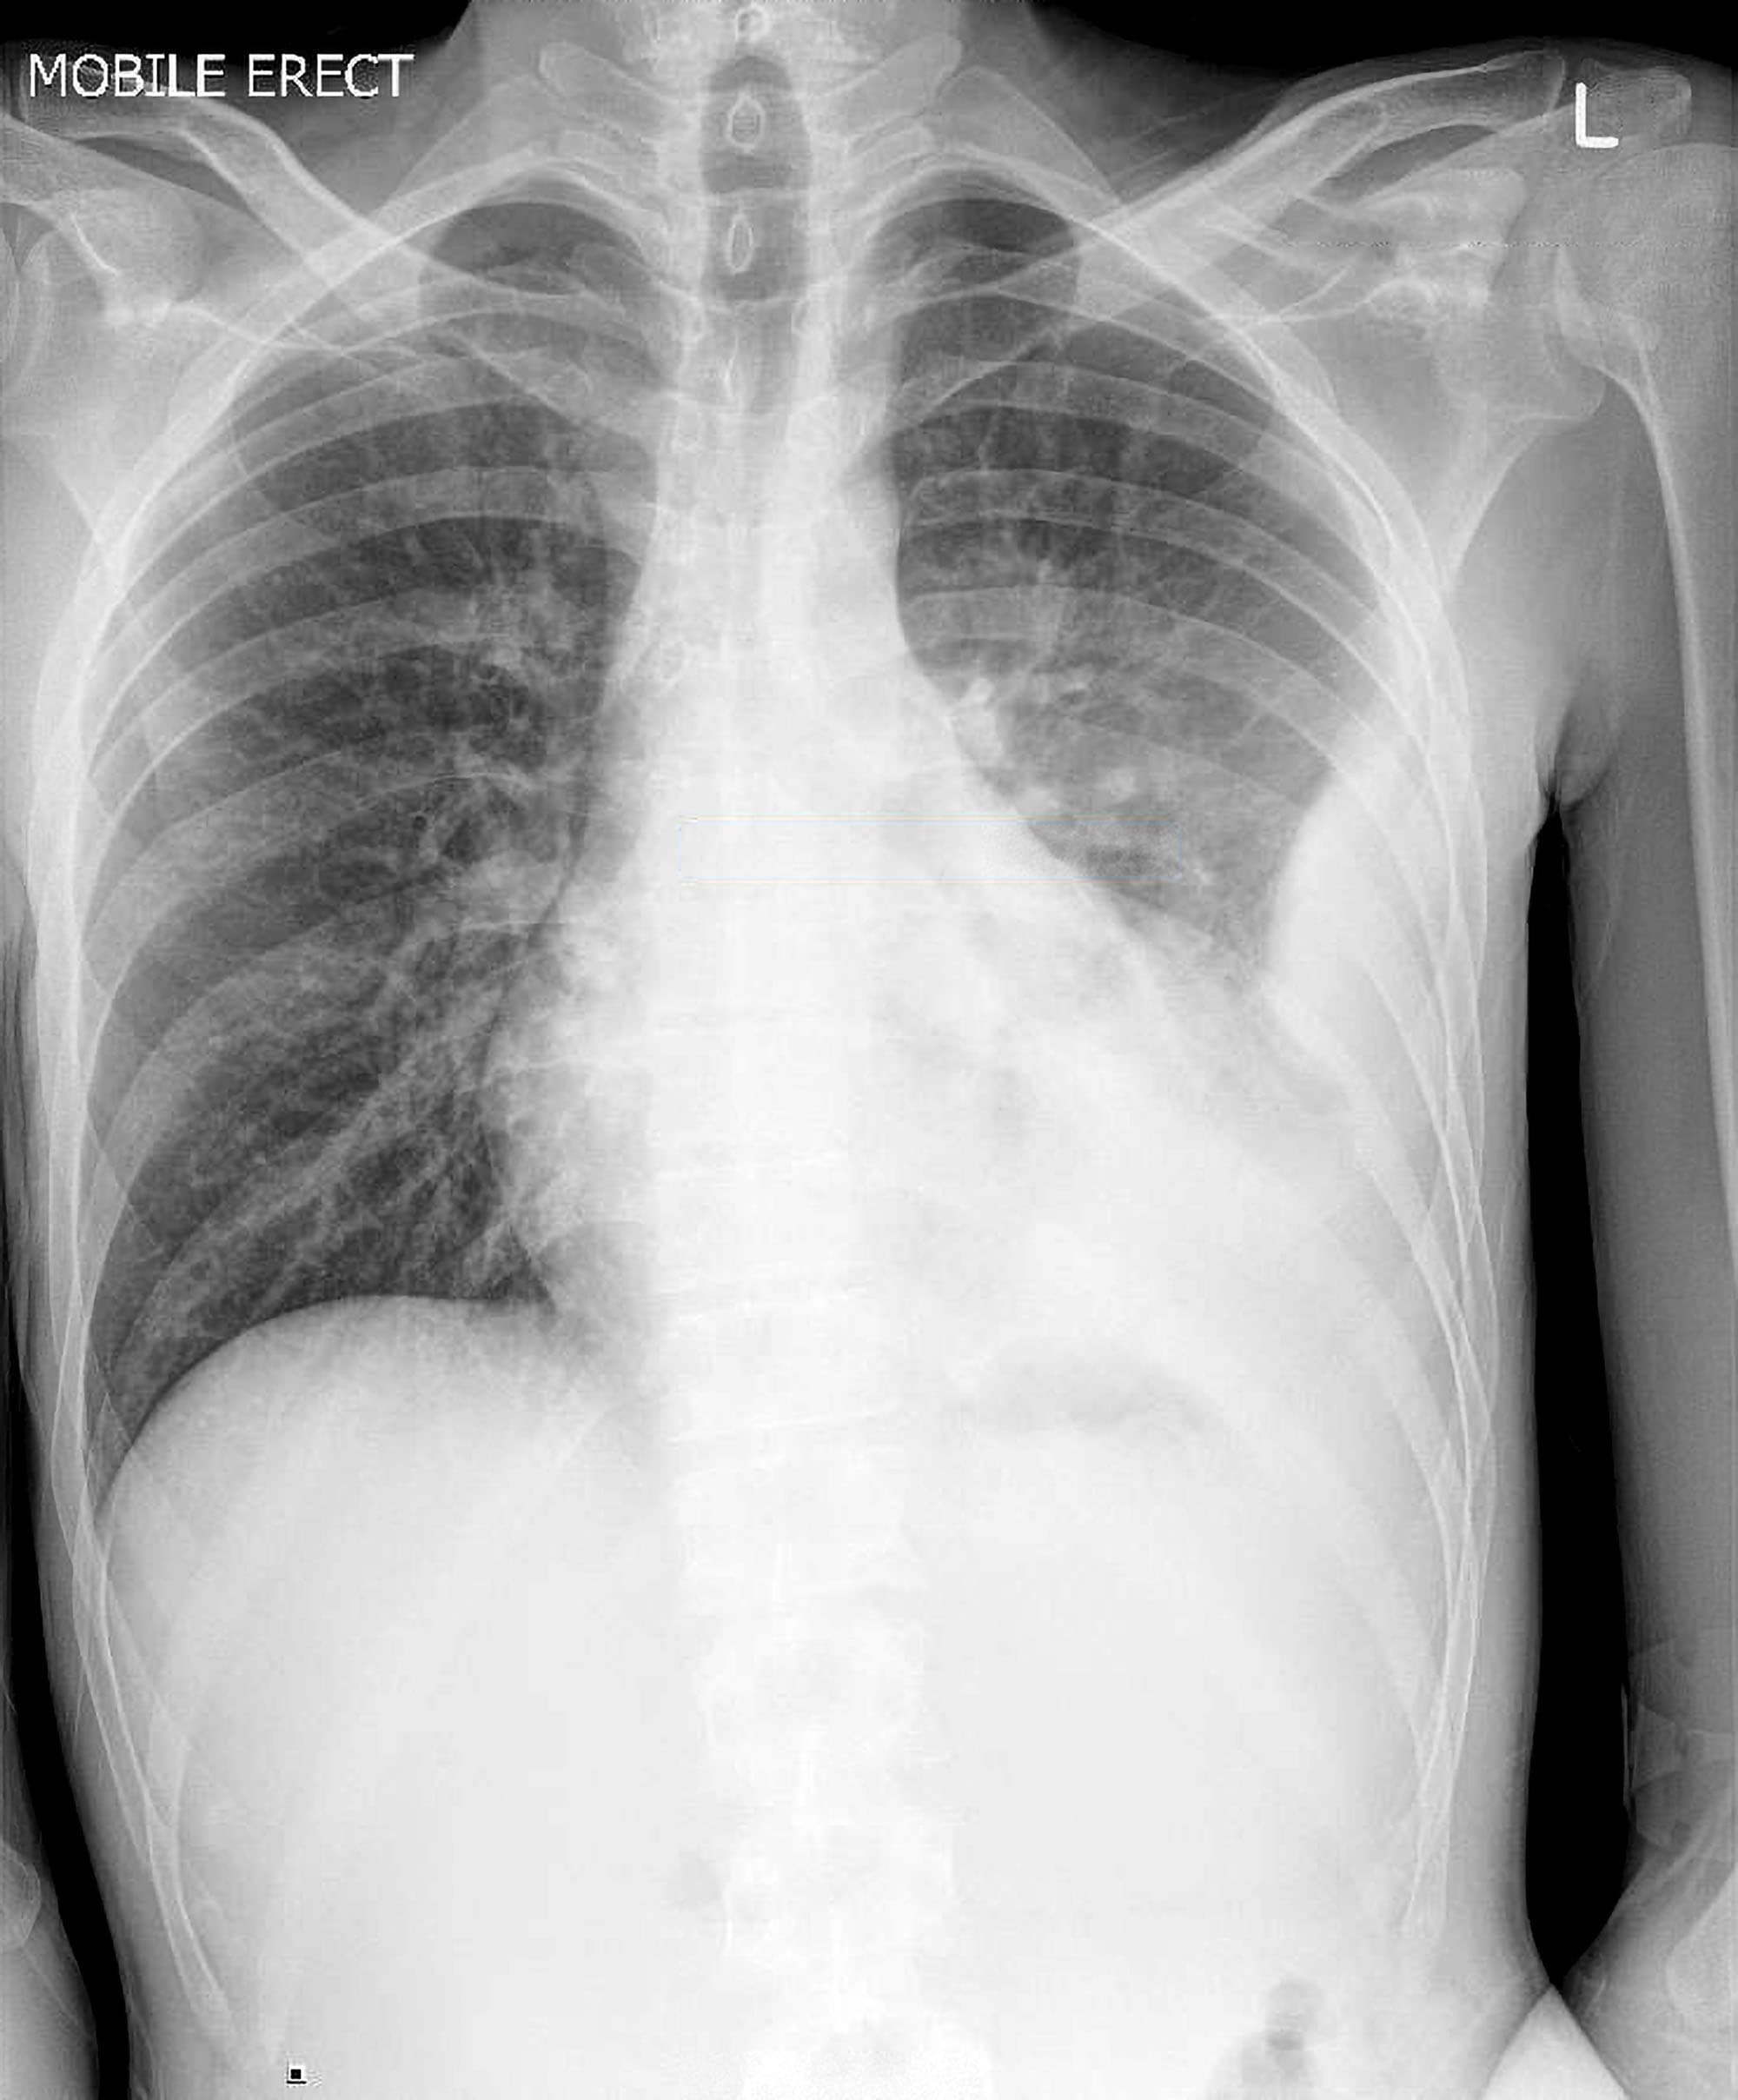 pneumonia chest x ray findings